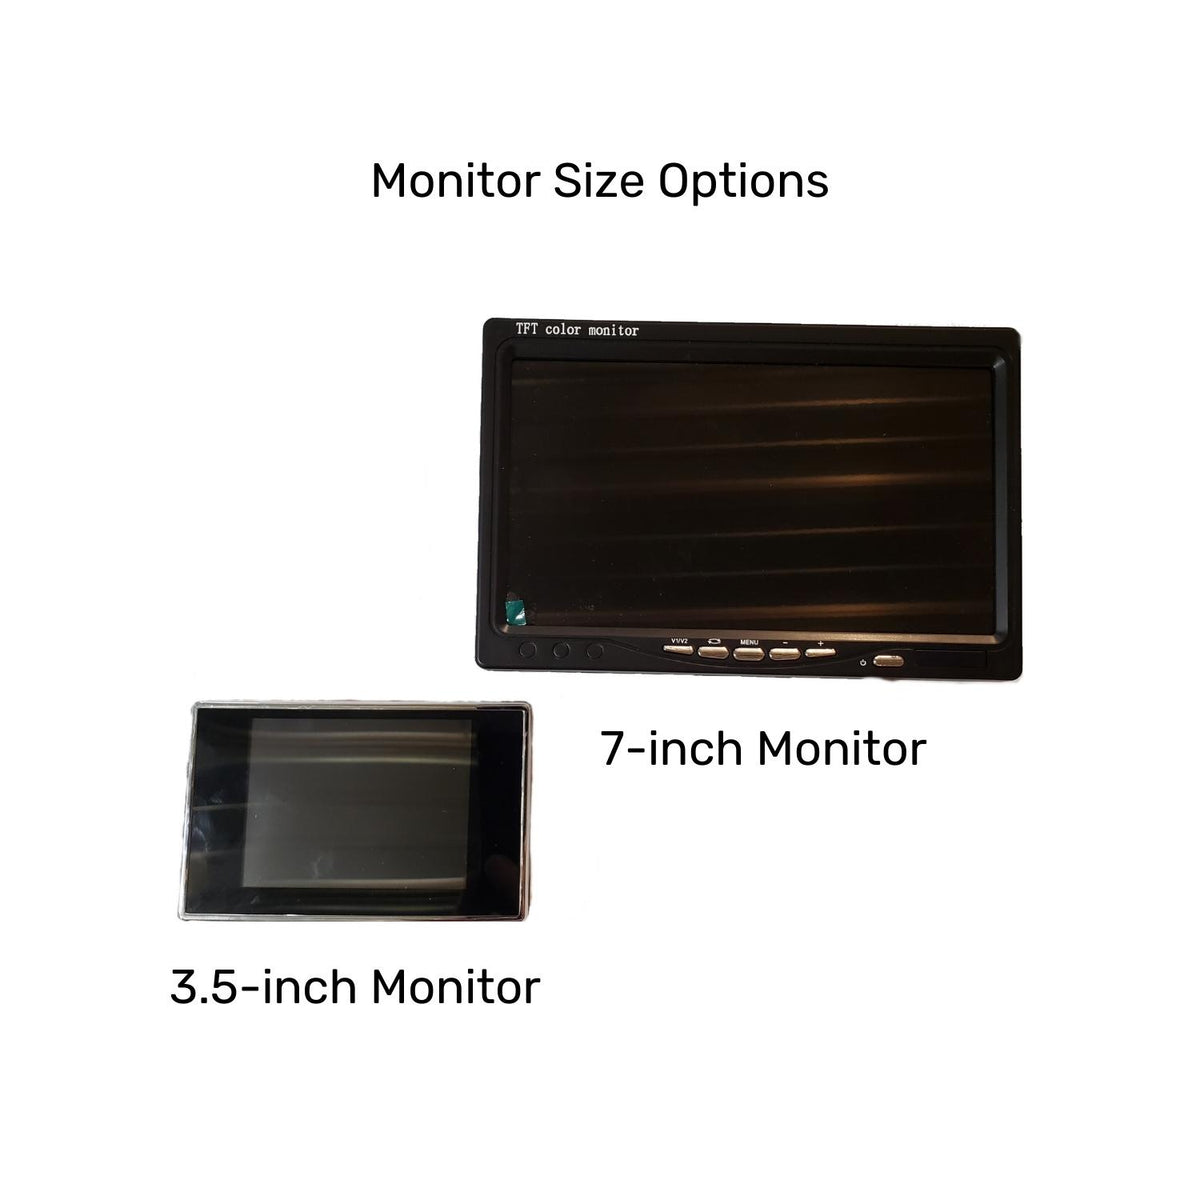 SCS LCD राइफल स्कोप फॉर पॉवरशूटर या शार्पशूटर व्हीलचेयर गन माउंट्स